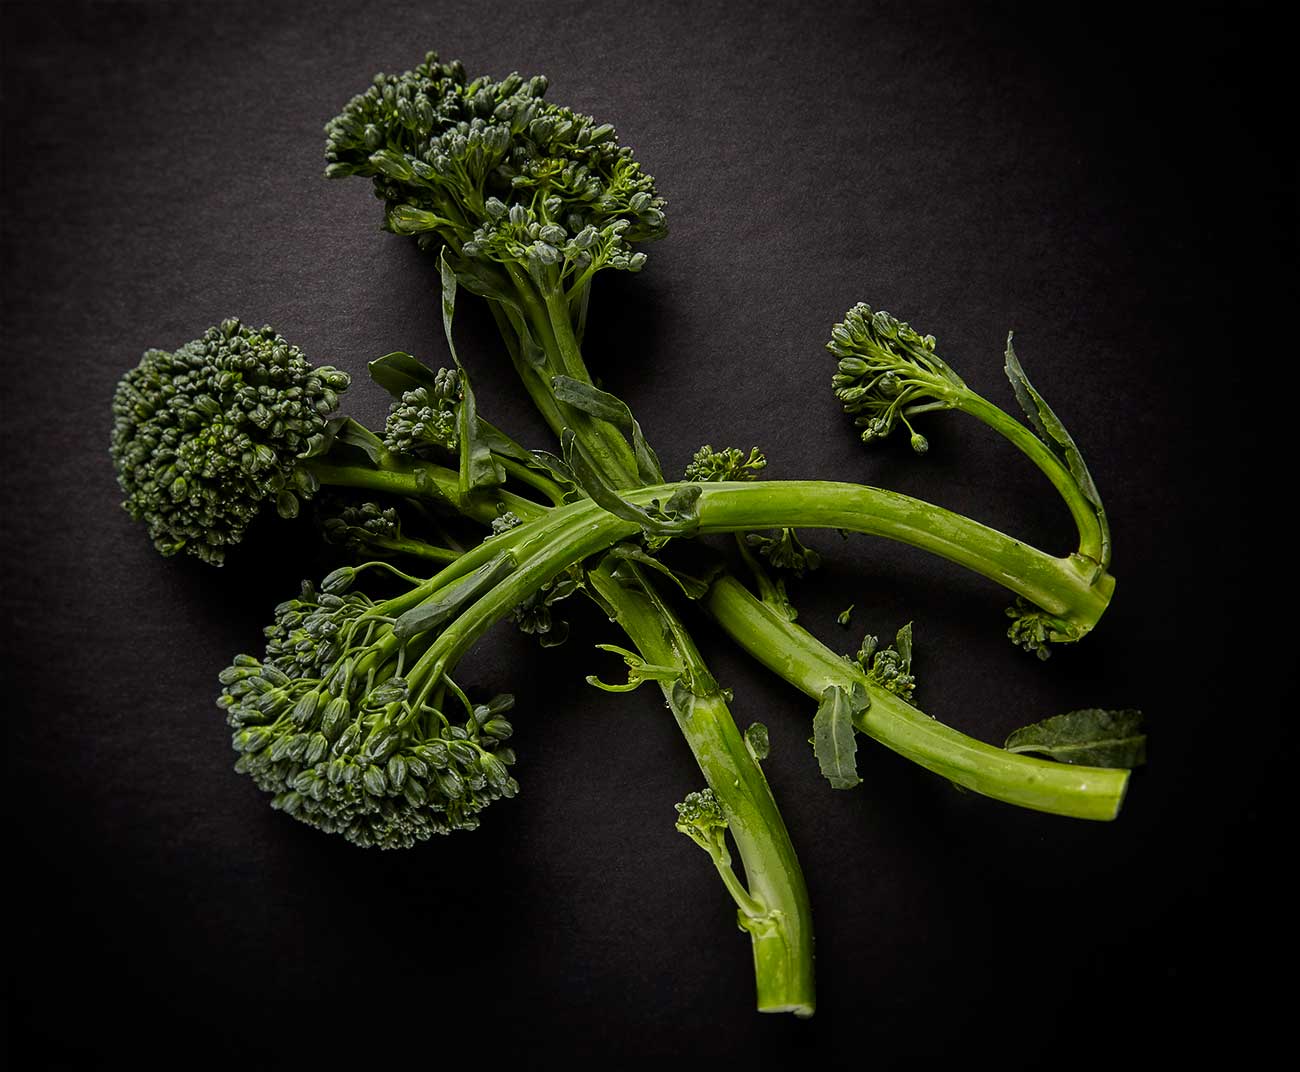 broccolini ©2016 by bret wills